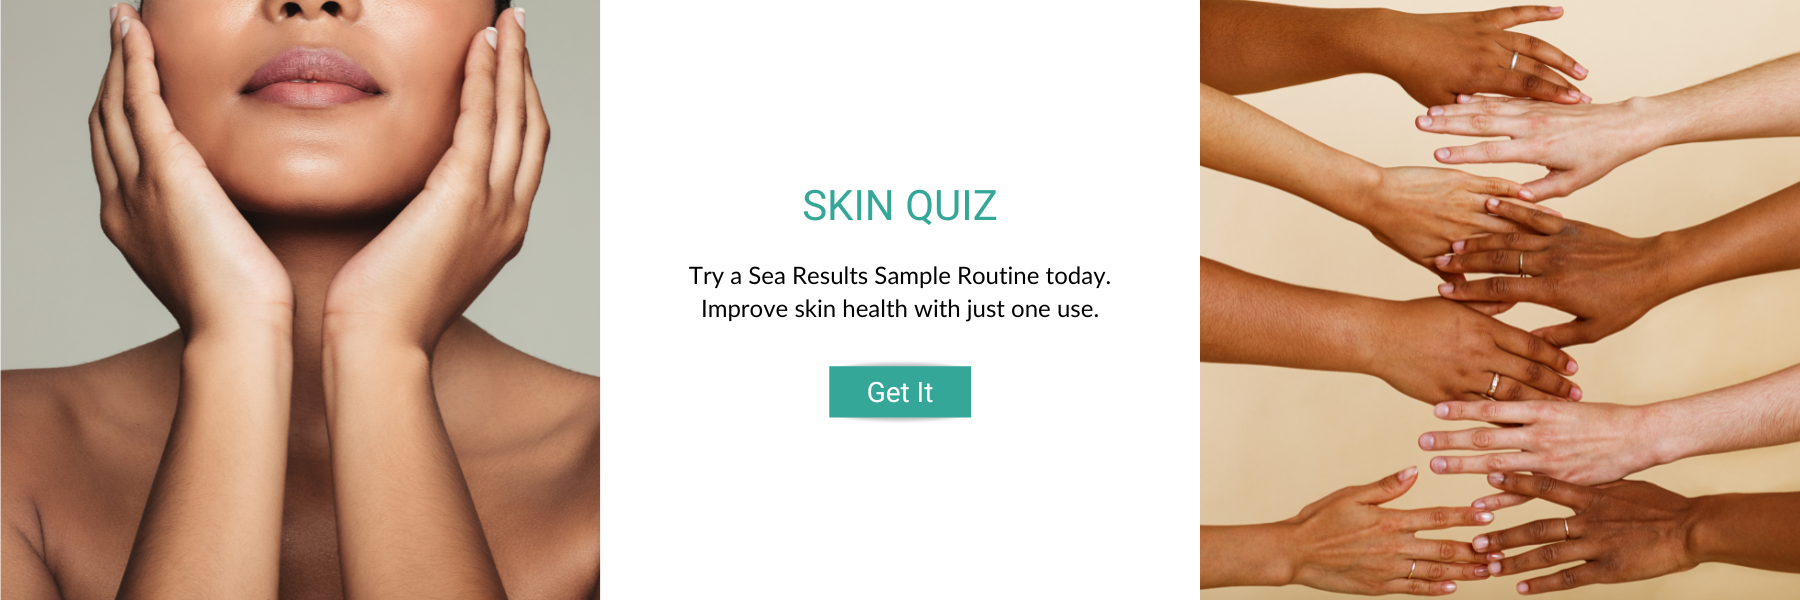 Seaflora Skin Quiz